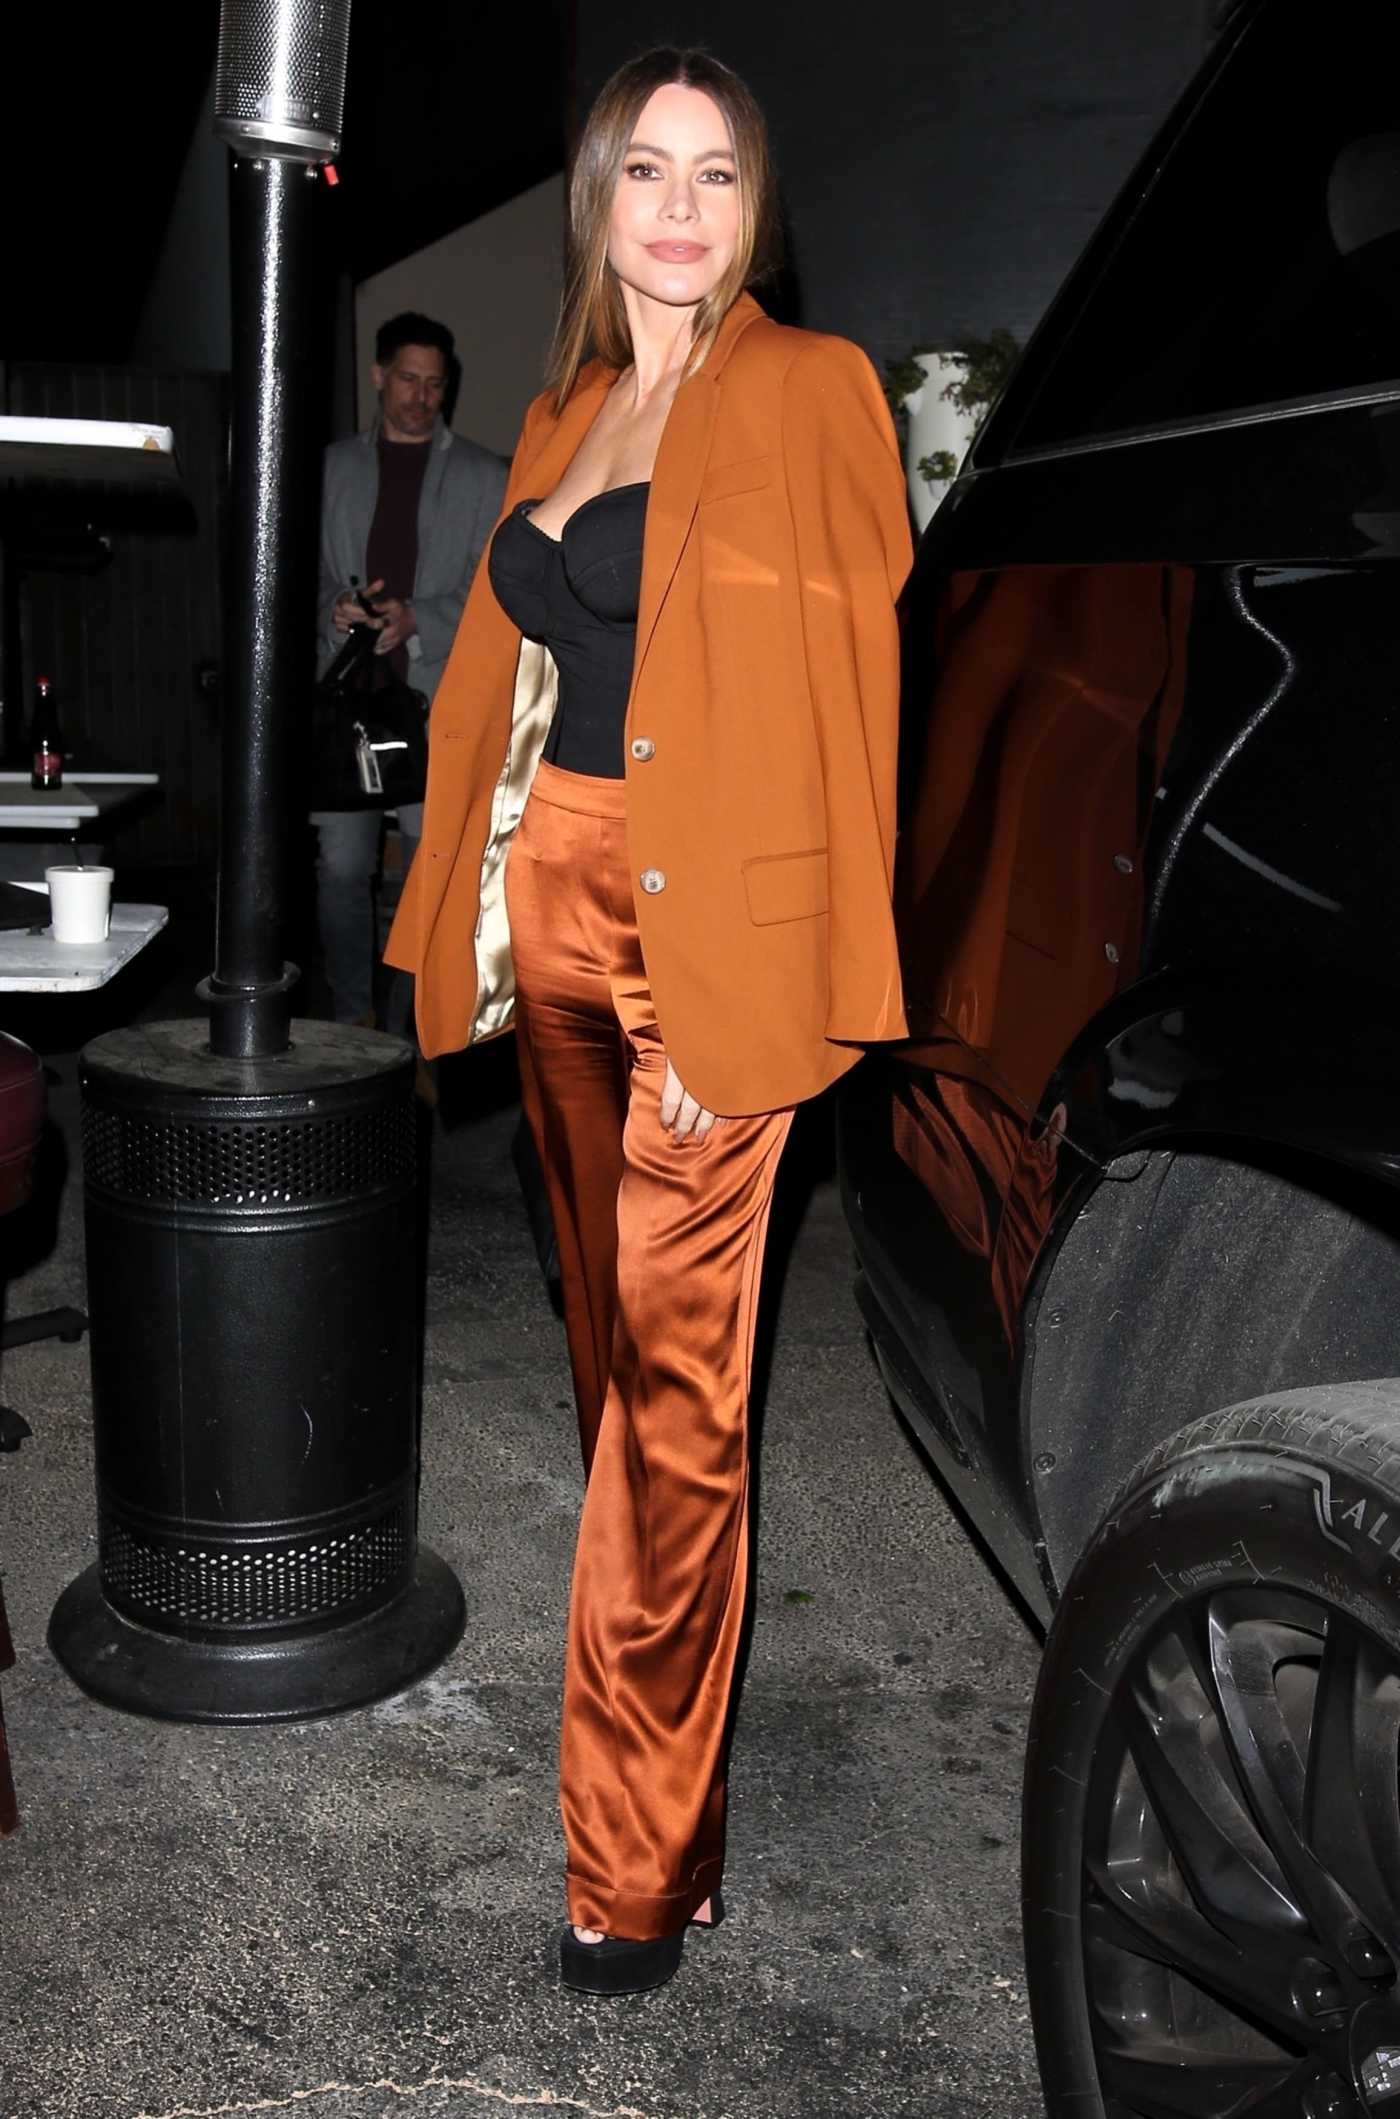 Sofia Vergara in an Orange Blazer Leaves a Romantic Dinner Date at Craig's in West Hollywood 02/20/2022